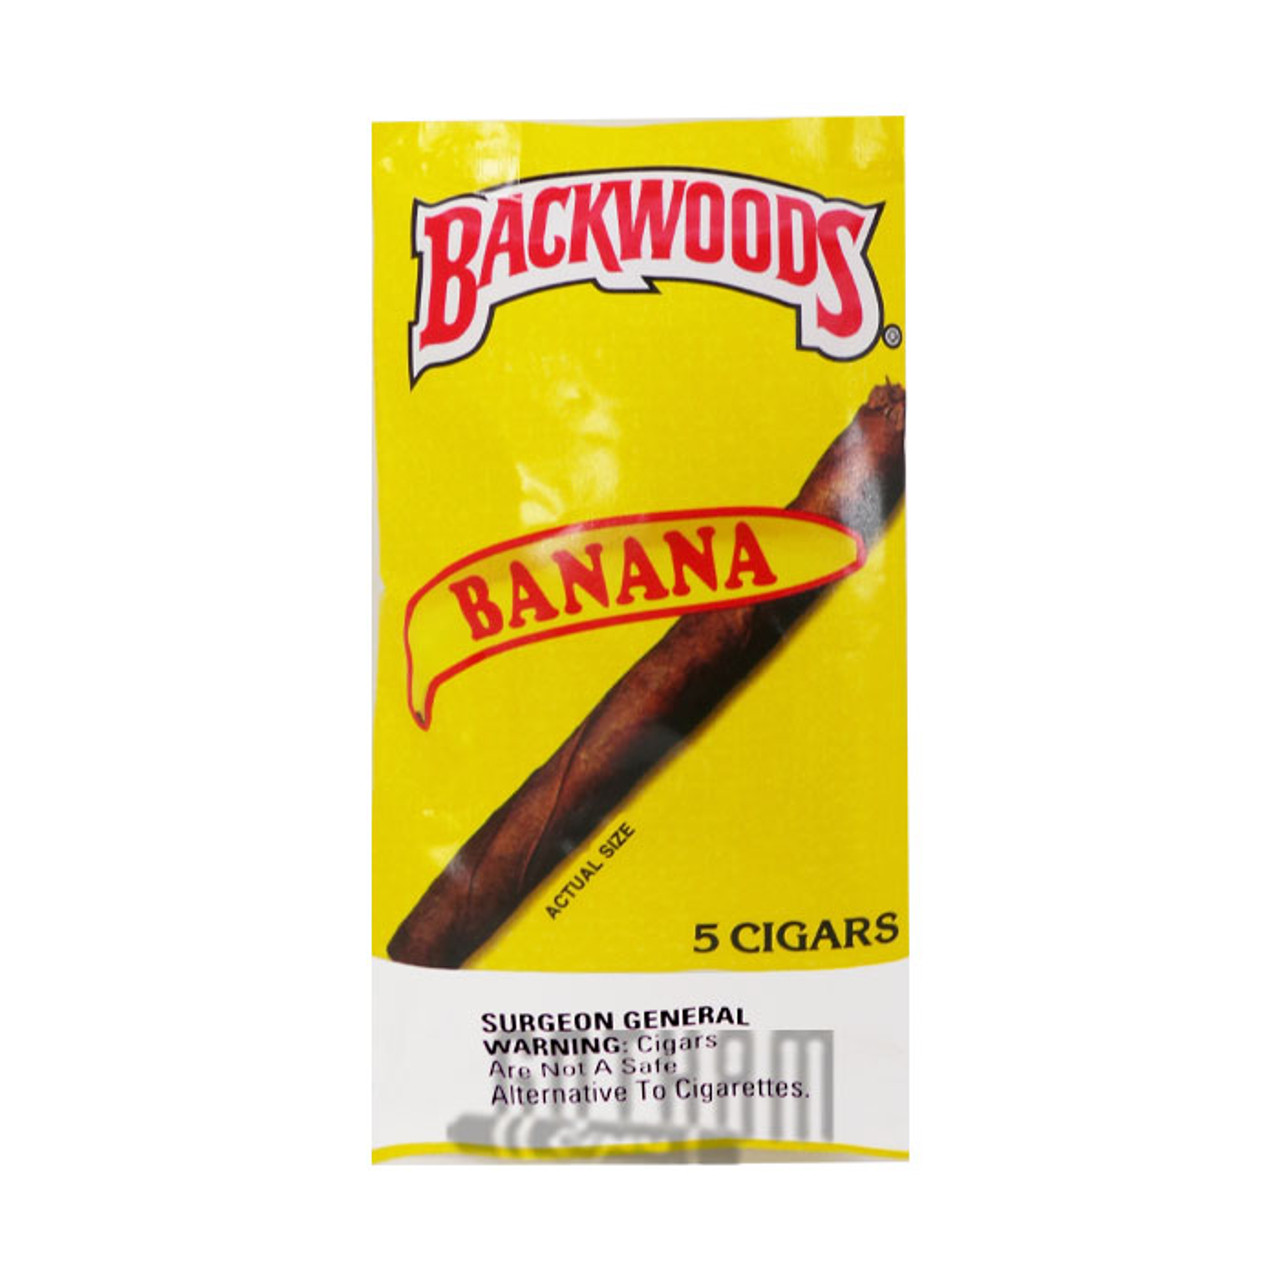 Backwoods Banana, Backwoods Cigars